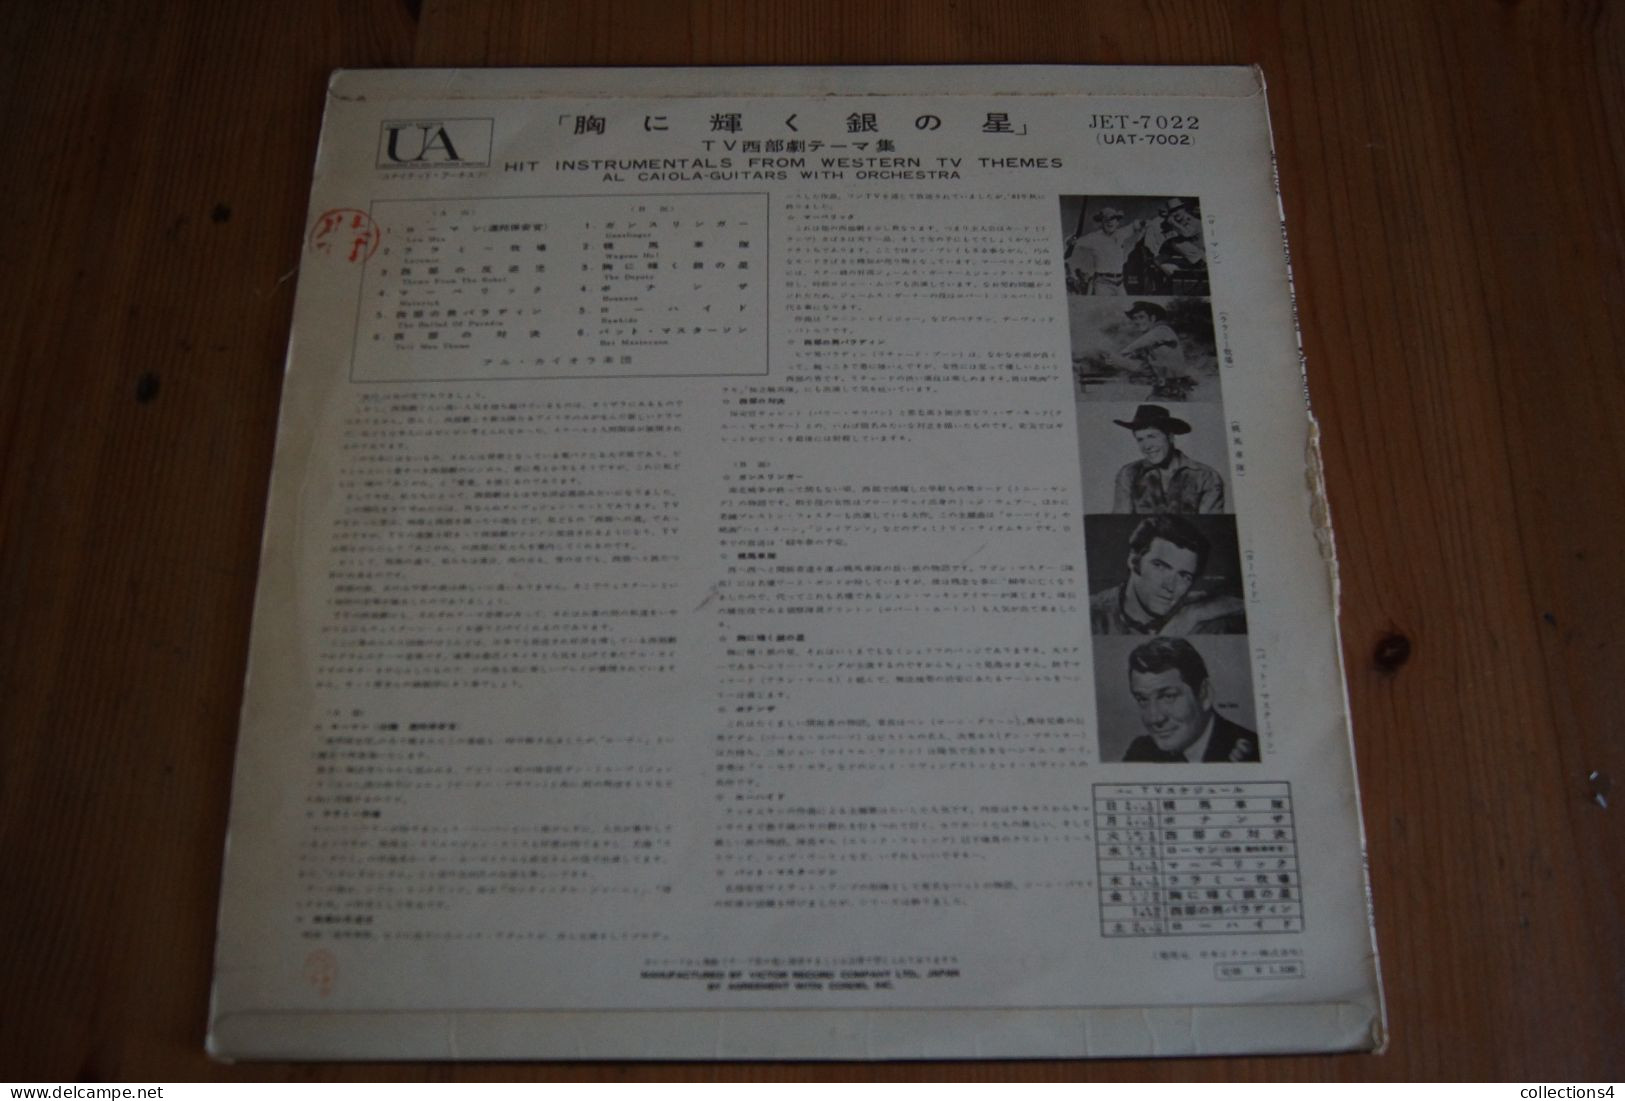 AL CAIOLA GUITARS WITH ORCHESTRA WESTERN TV THEMES    RARISSIME  LP JAPONAIS   19? - Soundtracks, Film Music